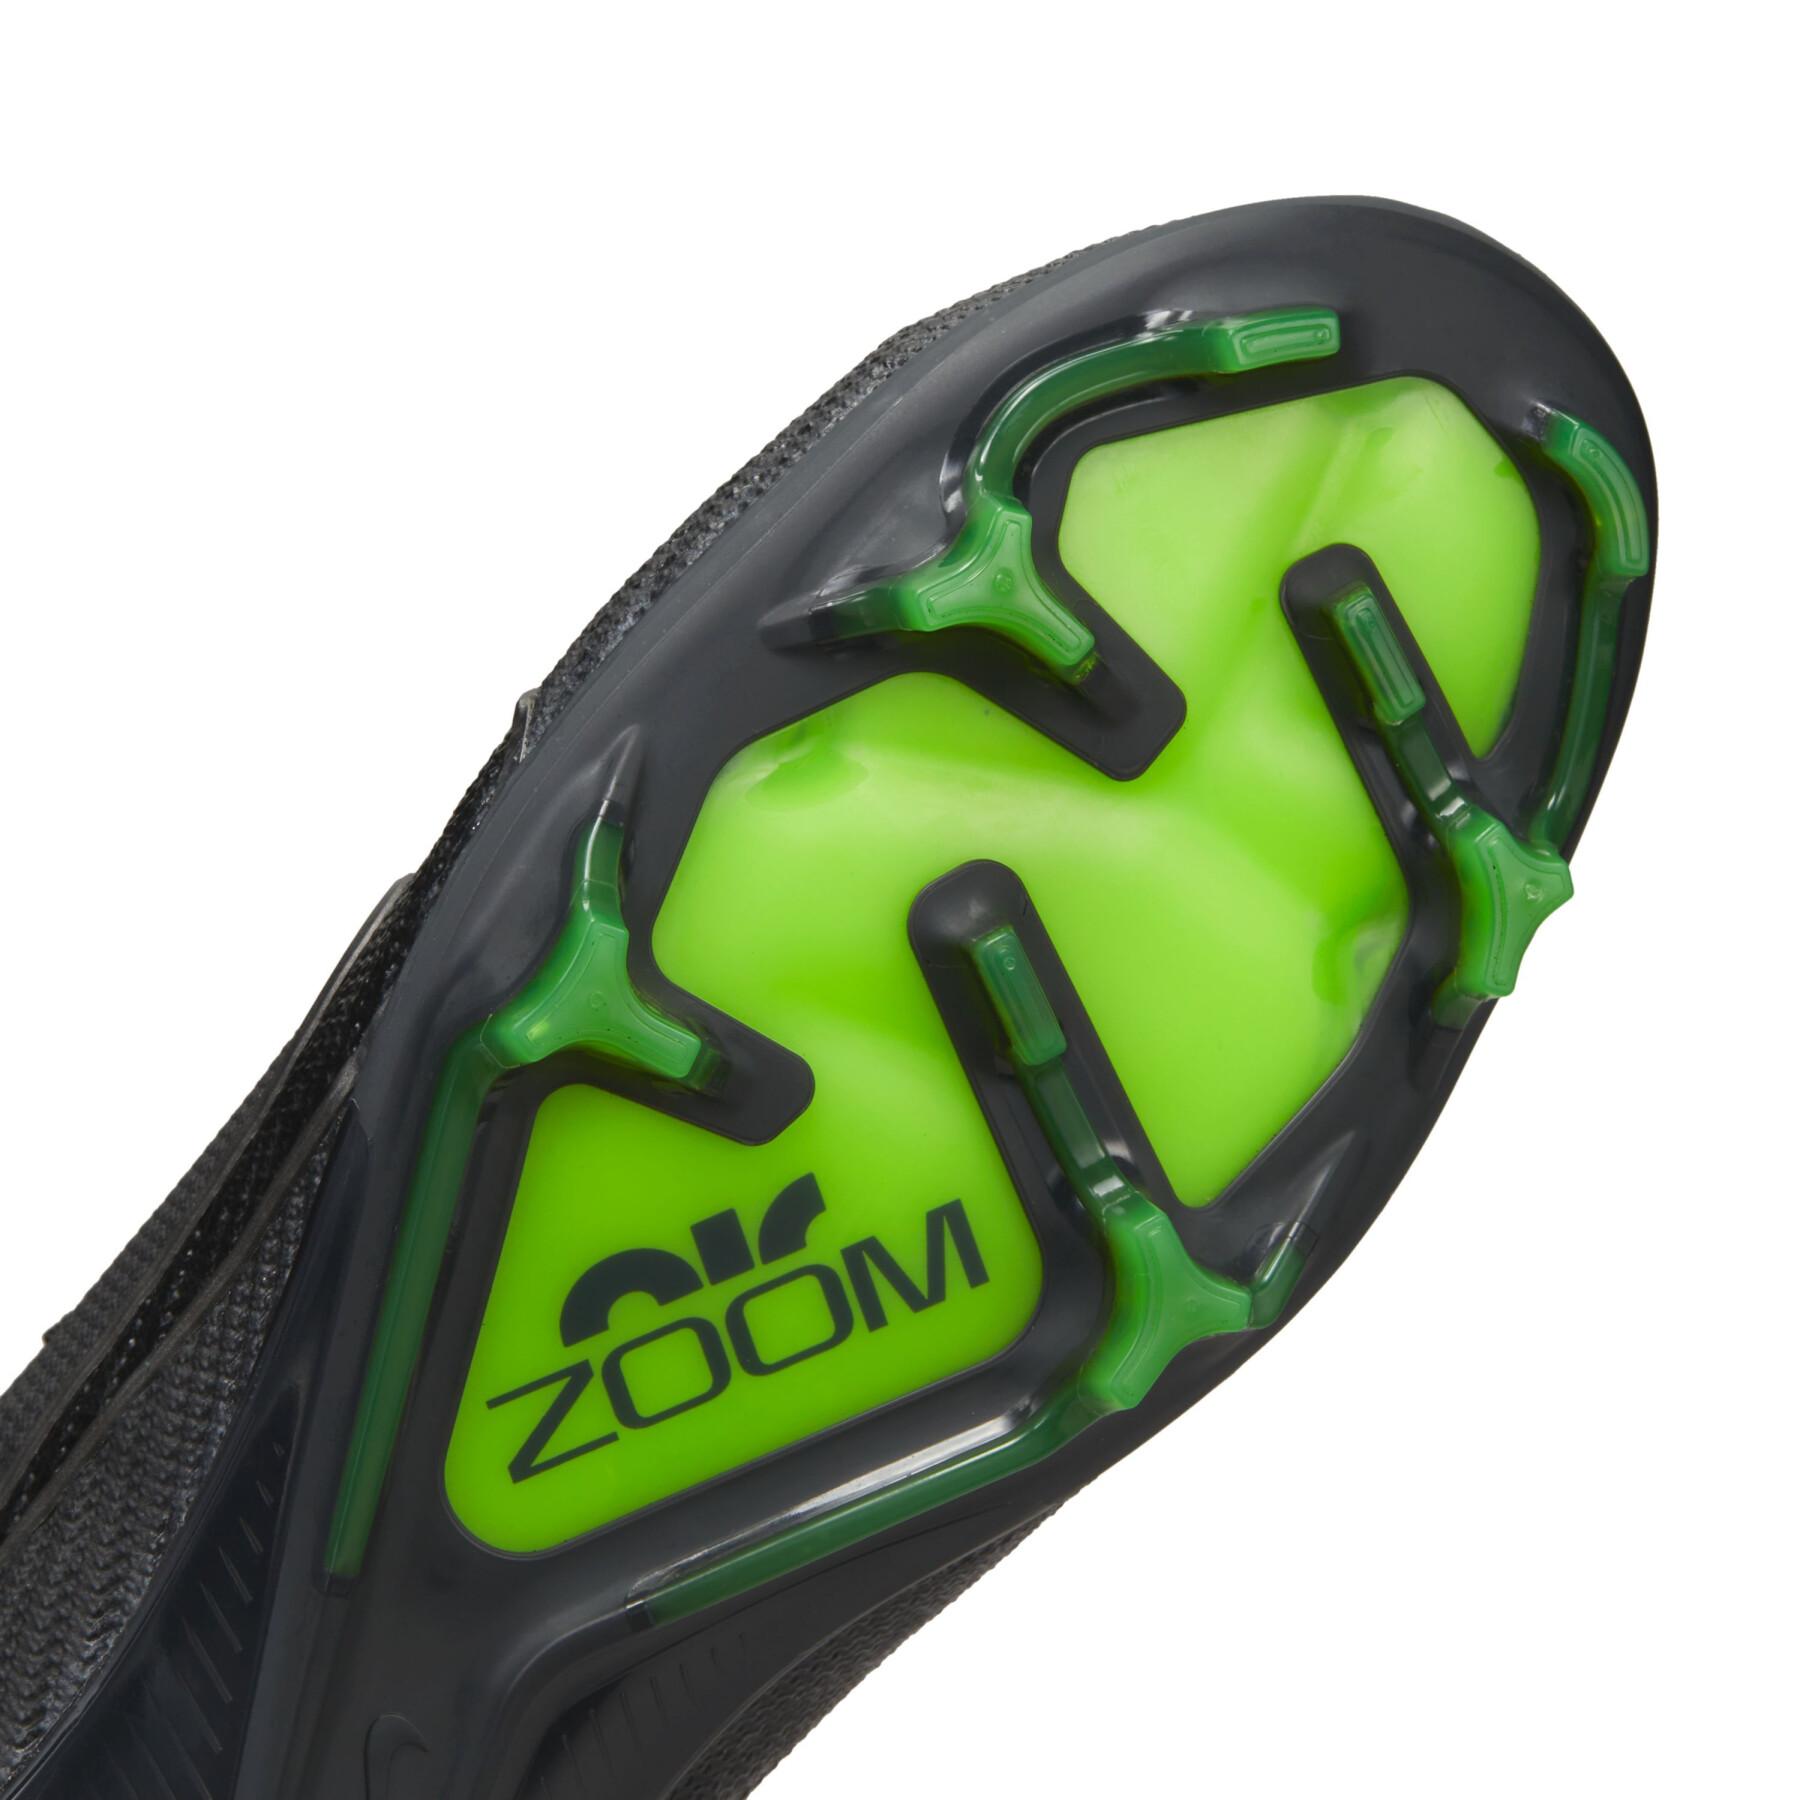 Chaussures de football Nike Zoom Mercurial Superfly 9 Elite FG- Shadow Black Pack